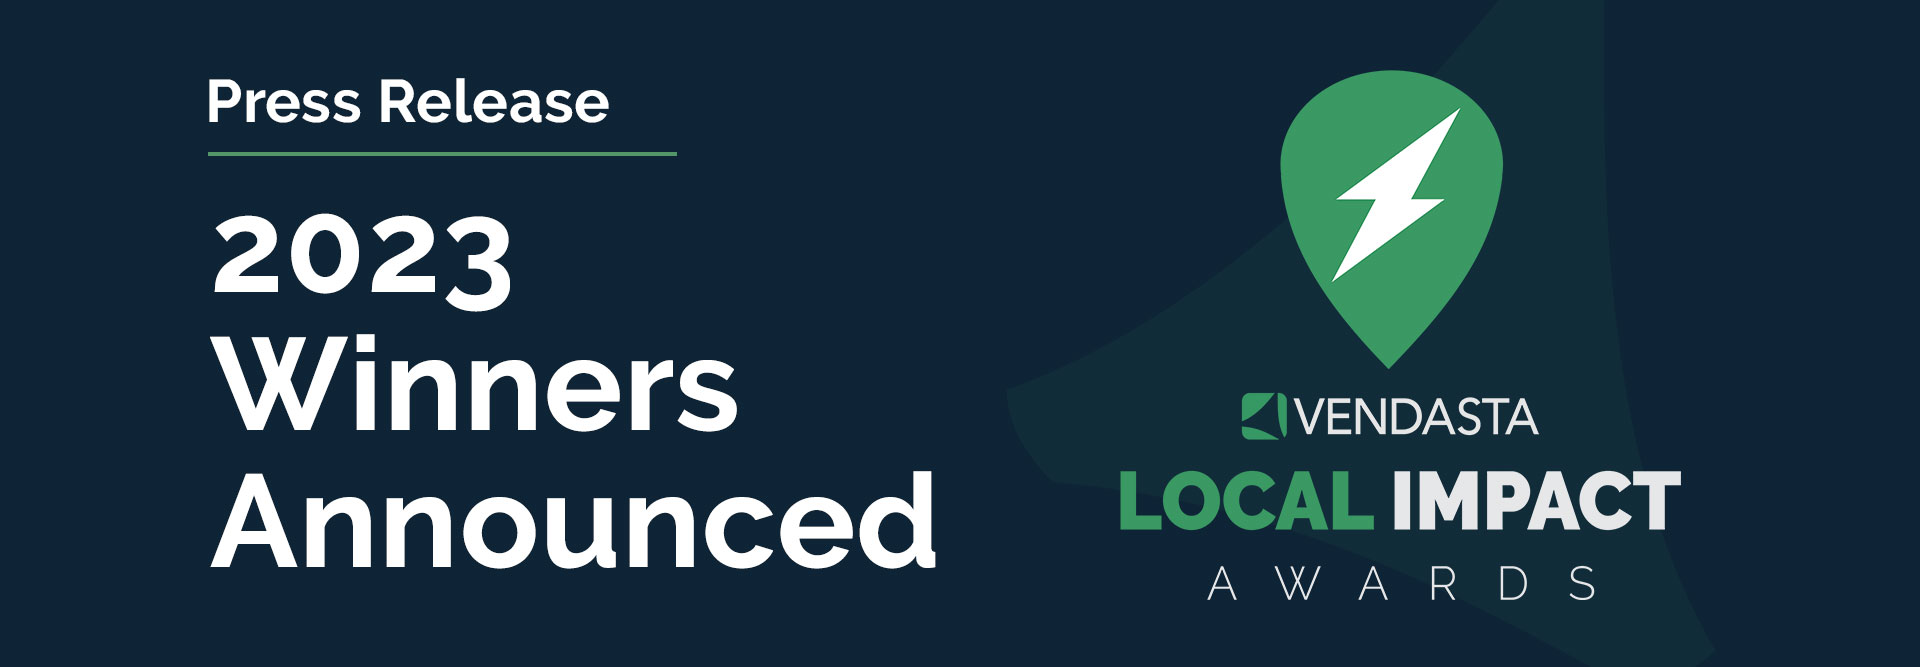 Vendasta announces 2023 Local Impact Awards winners